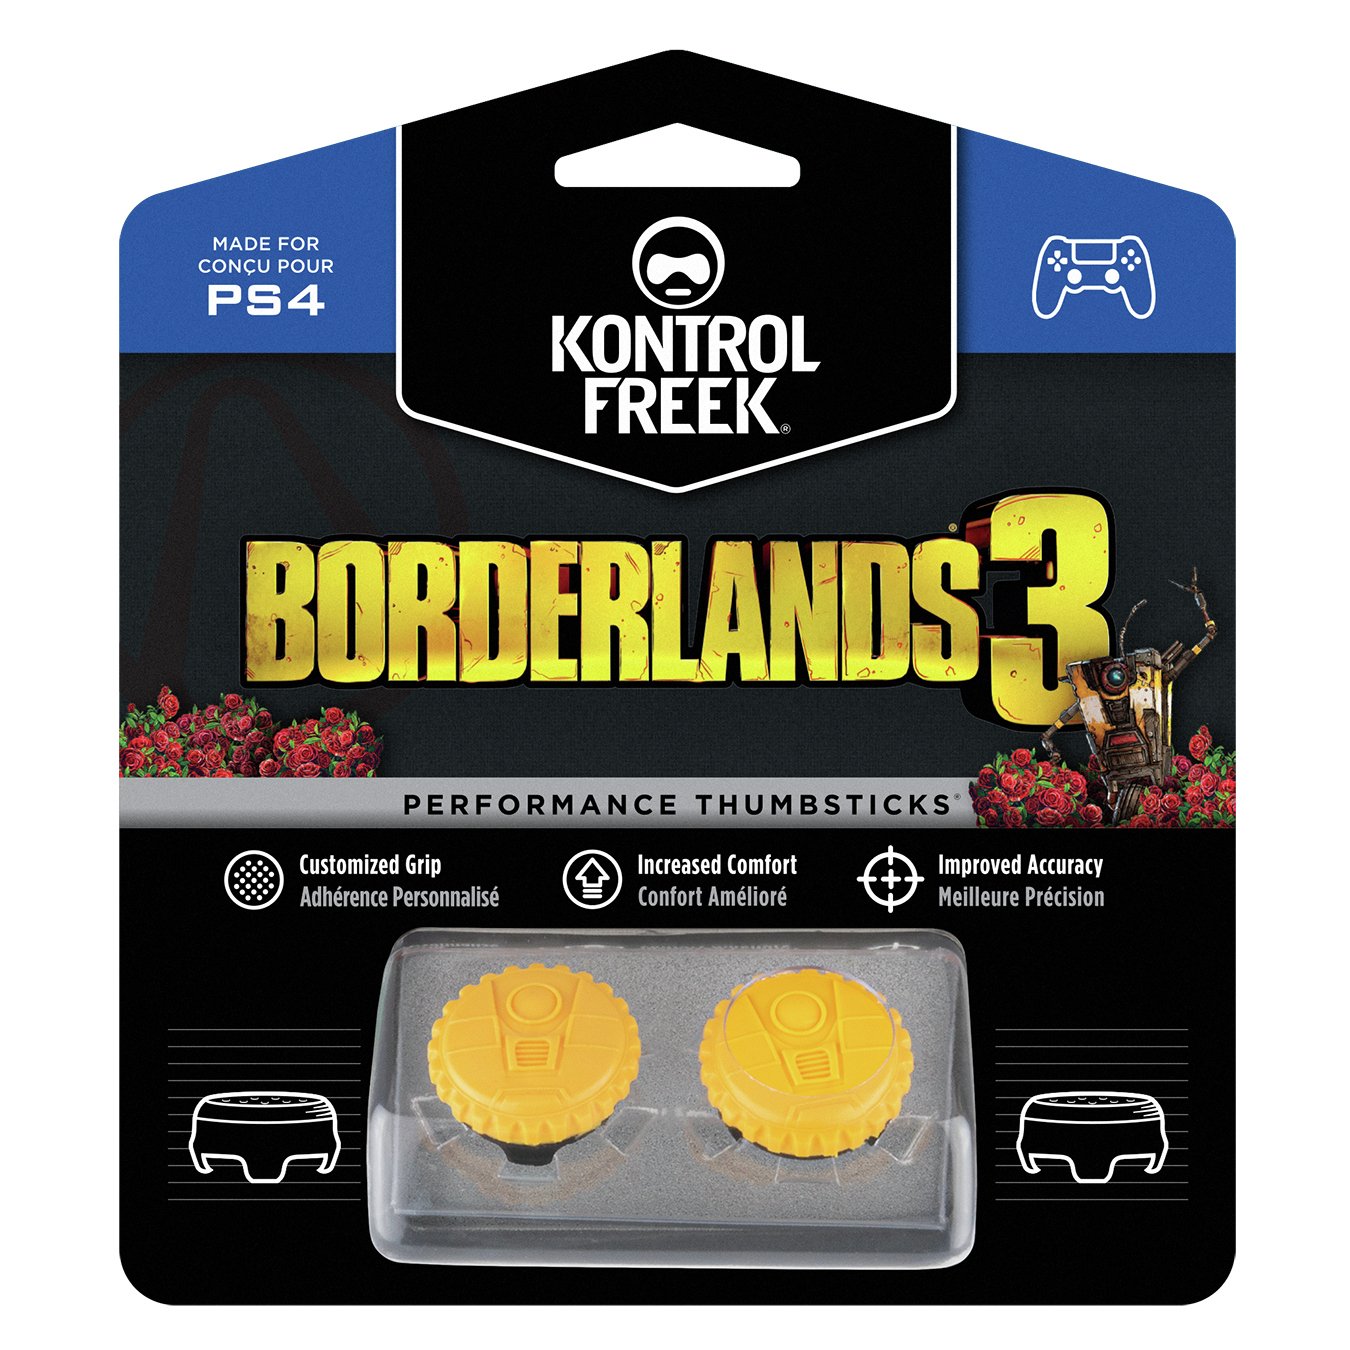 KontrolFreek Borderlands 3 PS4 Performance Thumbsticks Review